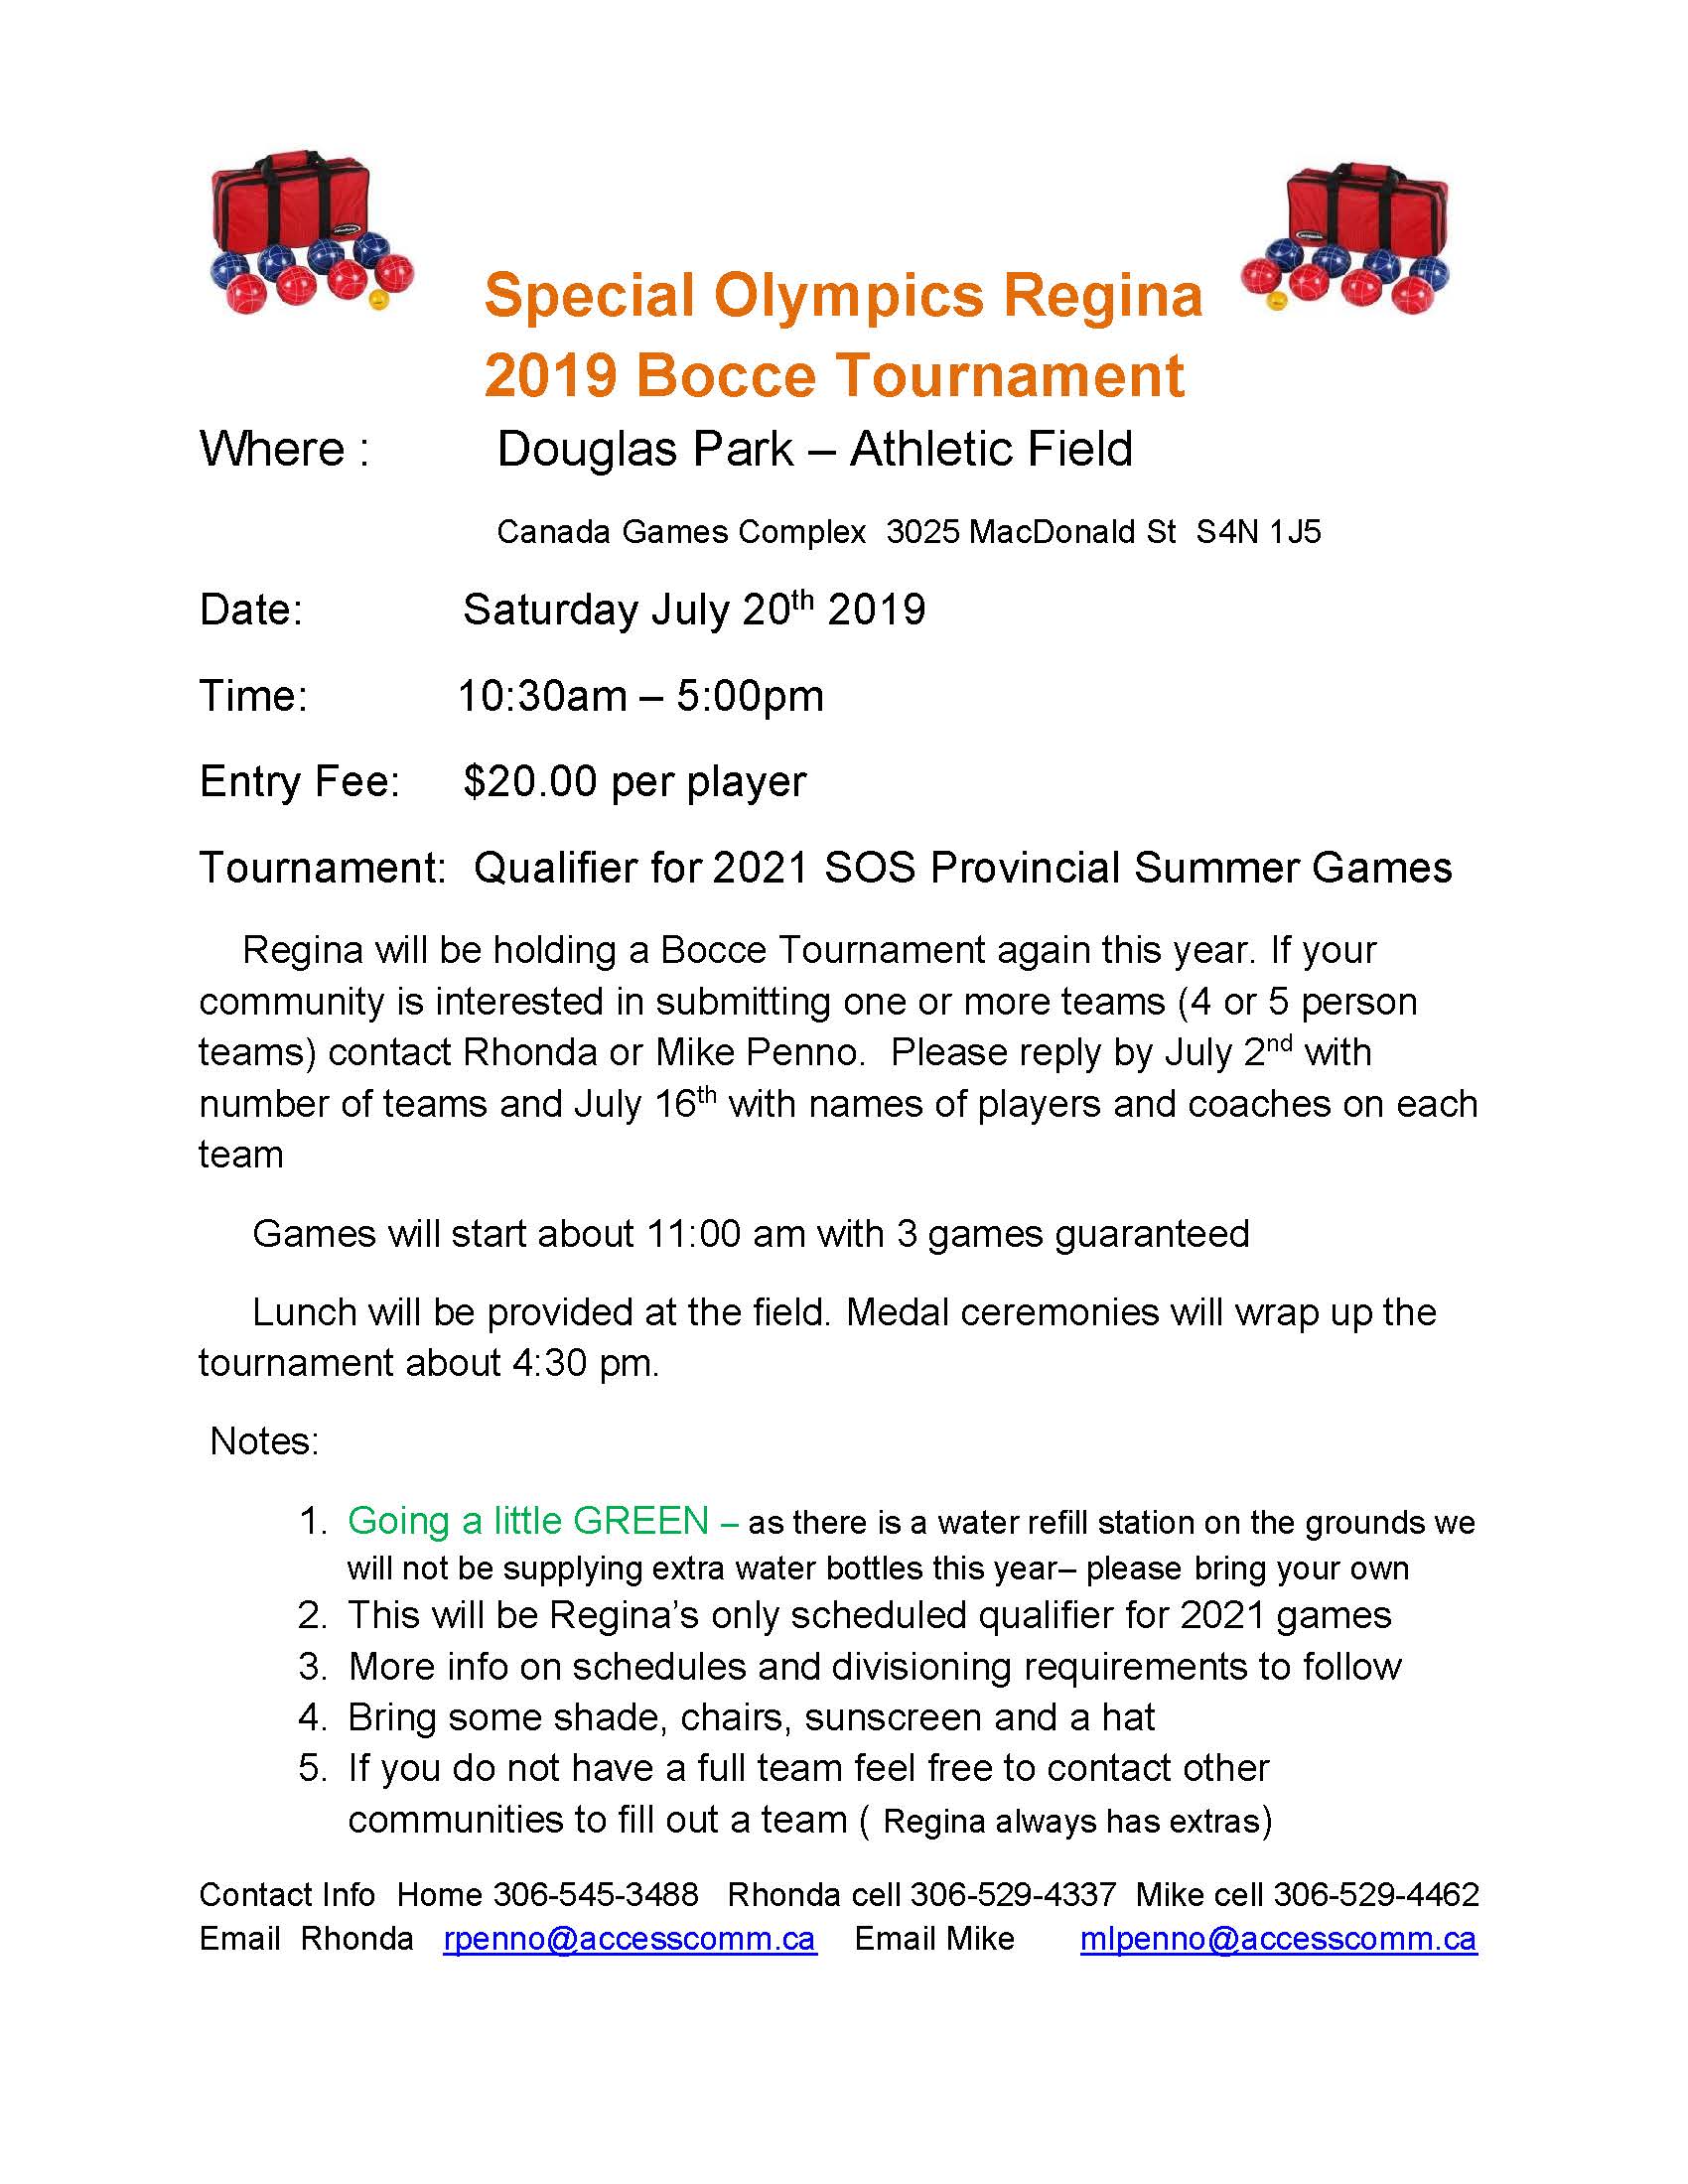 Special Olympics Regina Bocce Tournament 2019